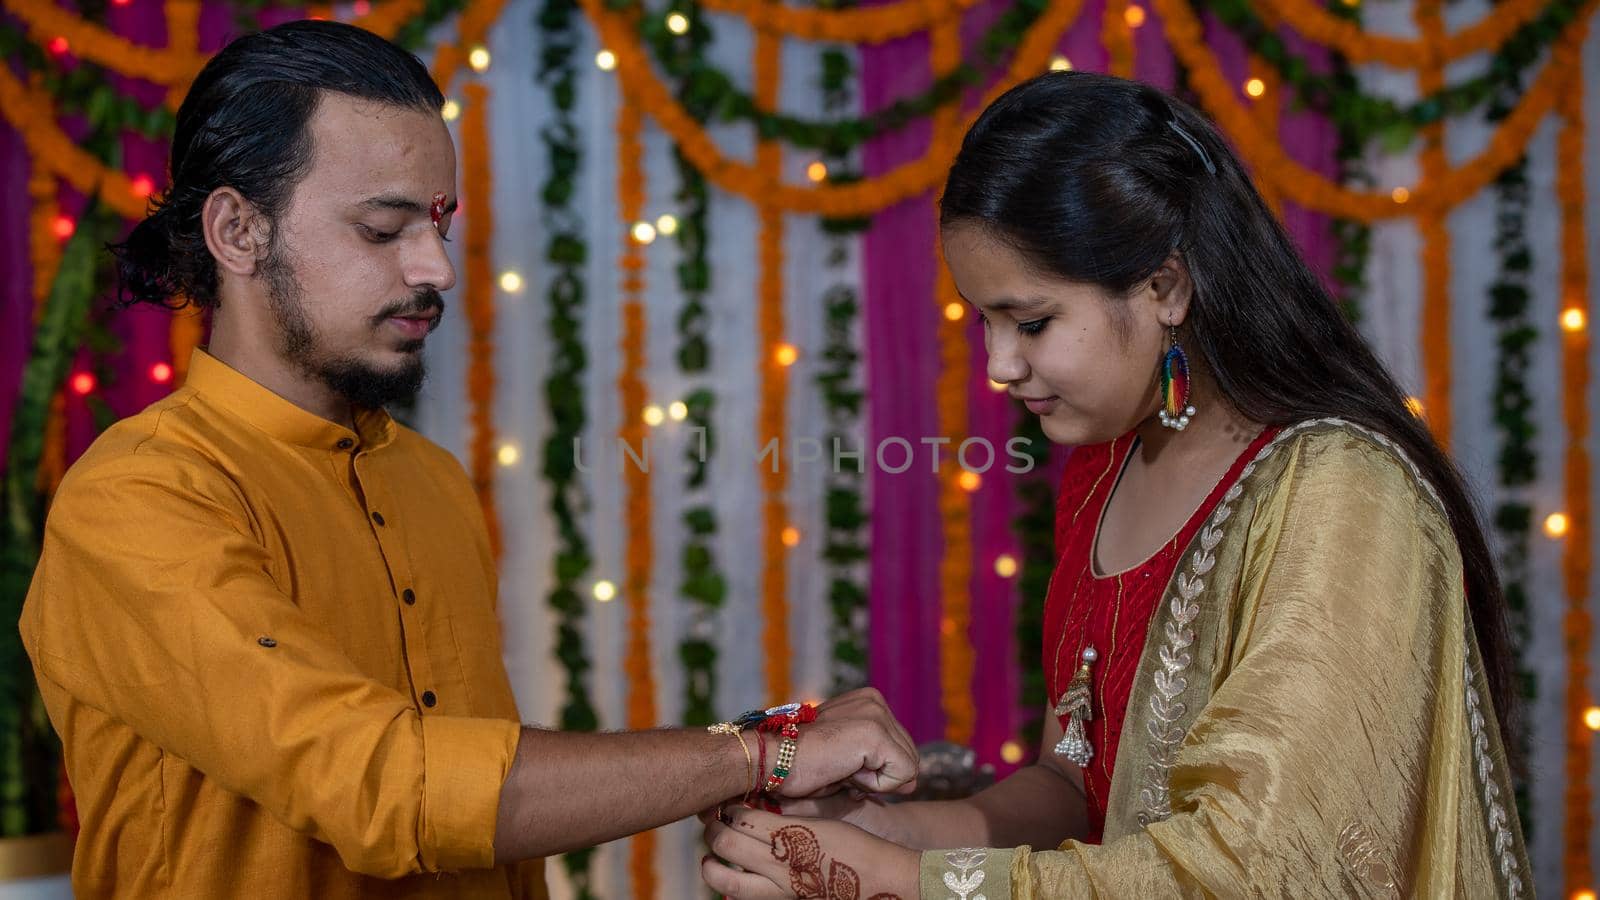 Sister tying the rakhi, Raksha Bandhan to brother's wrist during festival. by stocksvids